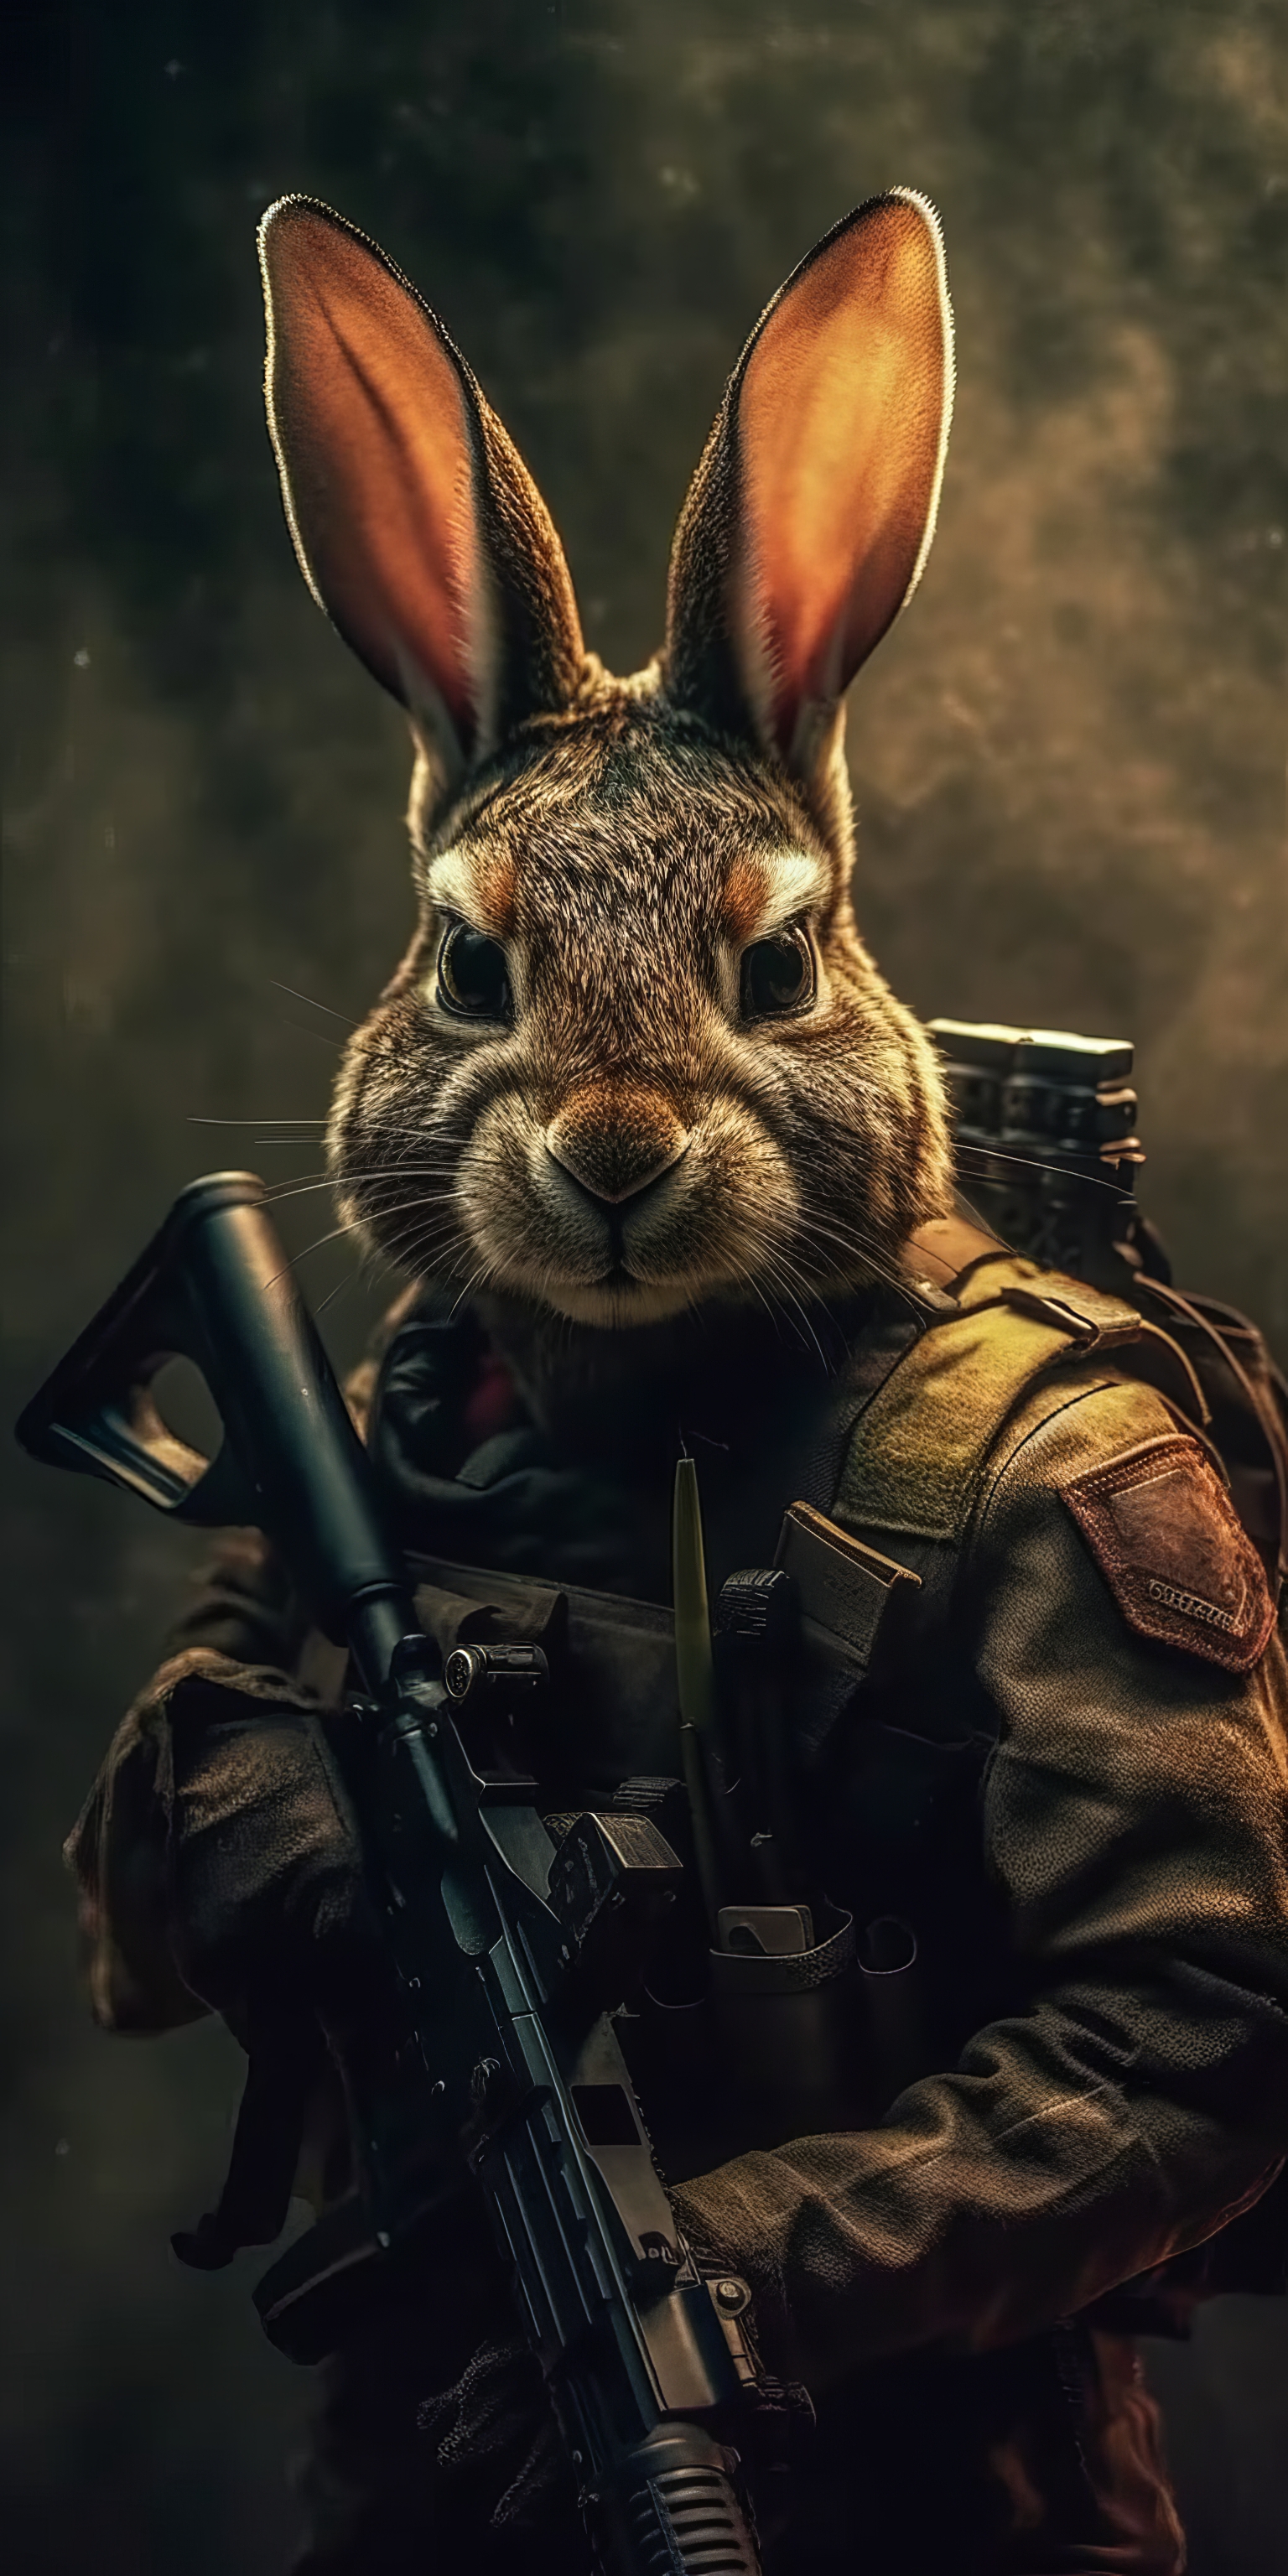 General 1536x3072 AI art rabbits tactical soldier portrait display gun looking at viewer simple background minimalism uniform